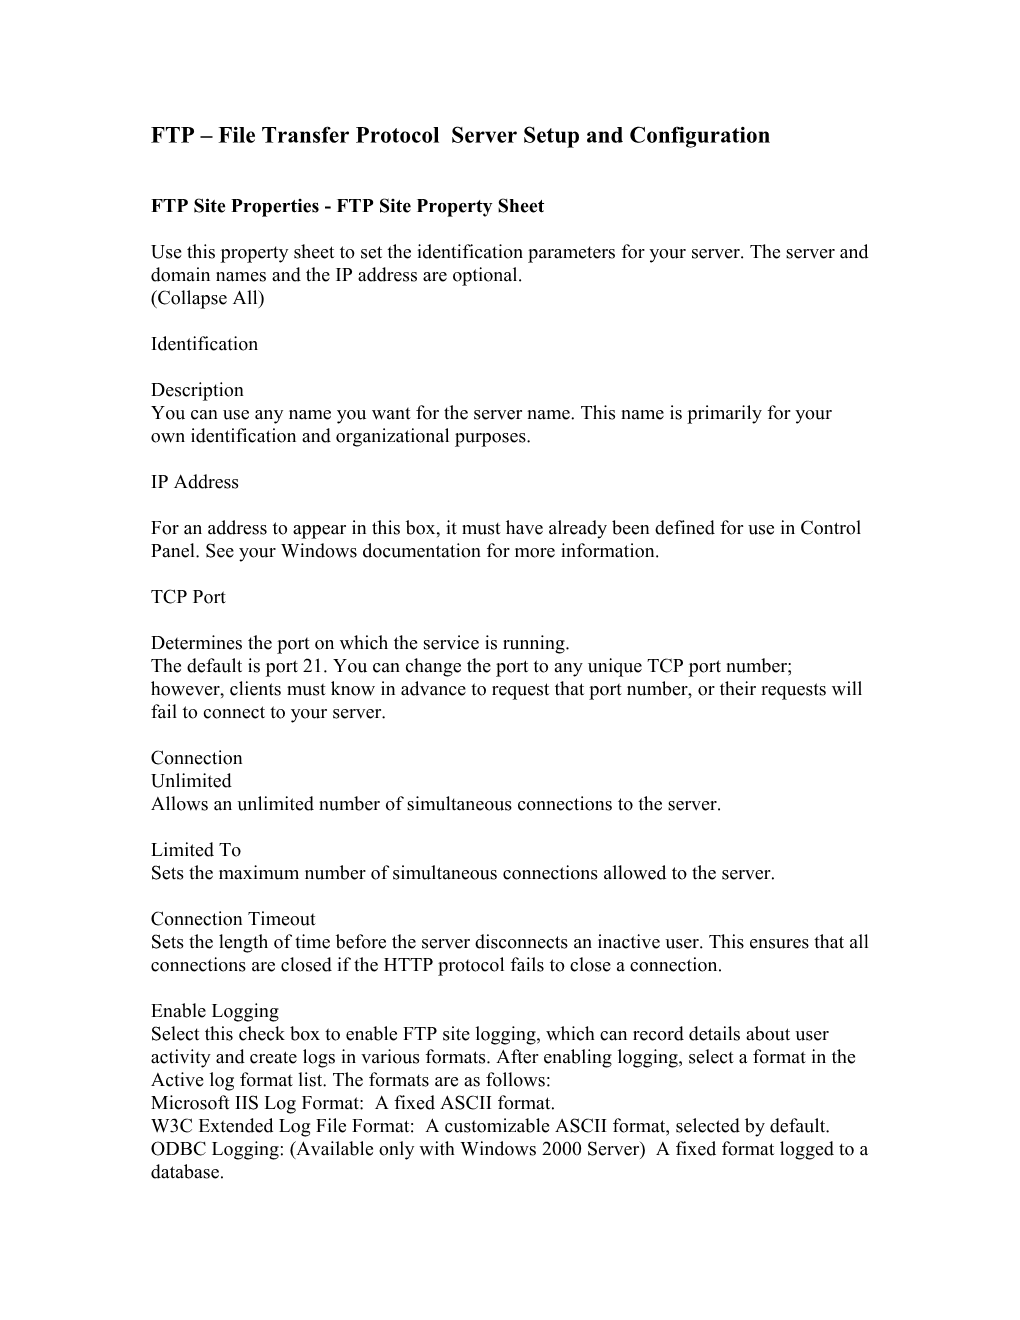 FTP File Transfer Protocol Server Setup and Confiquration